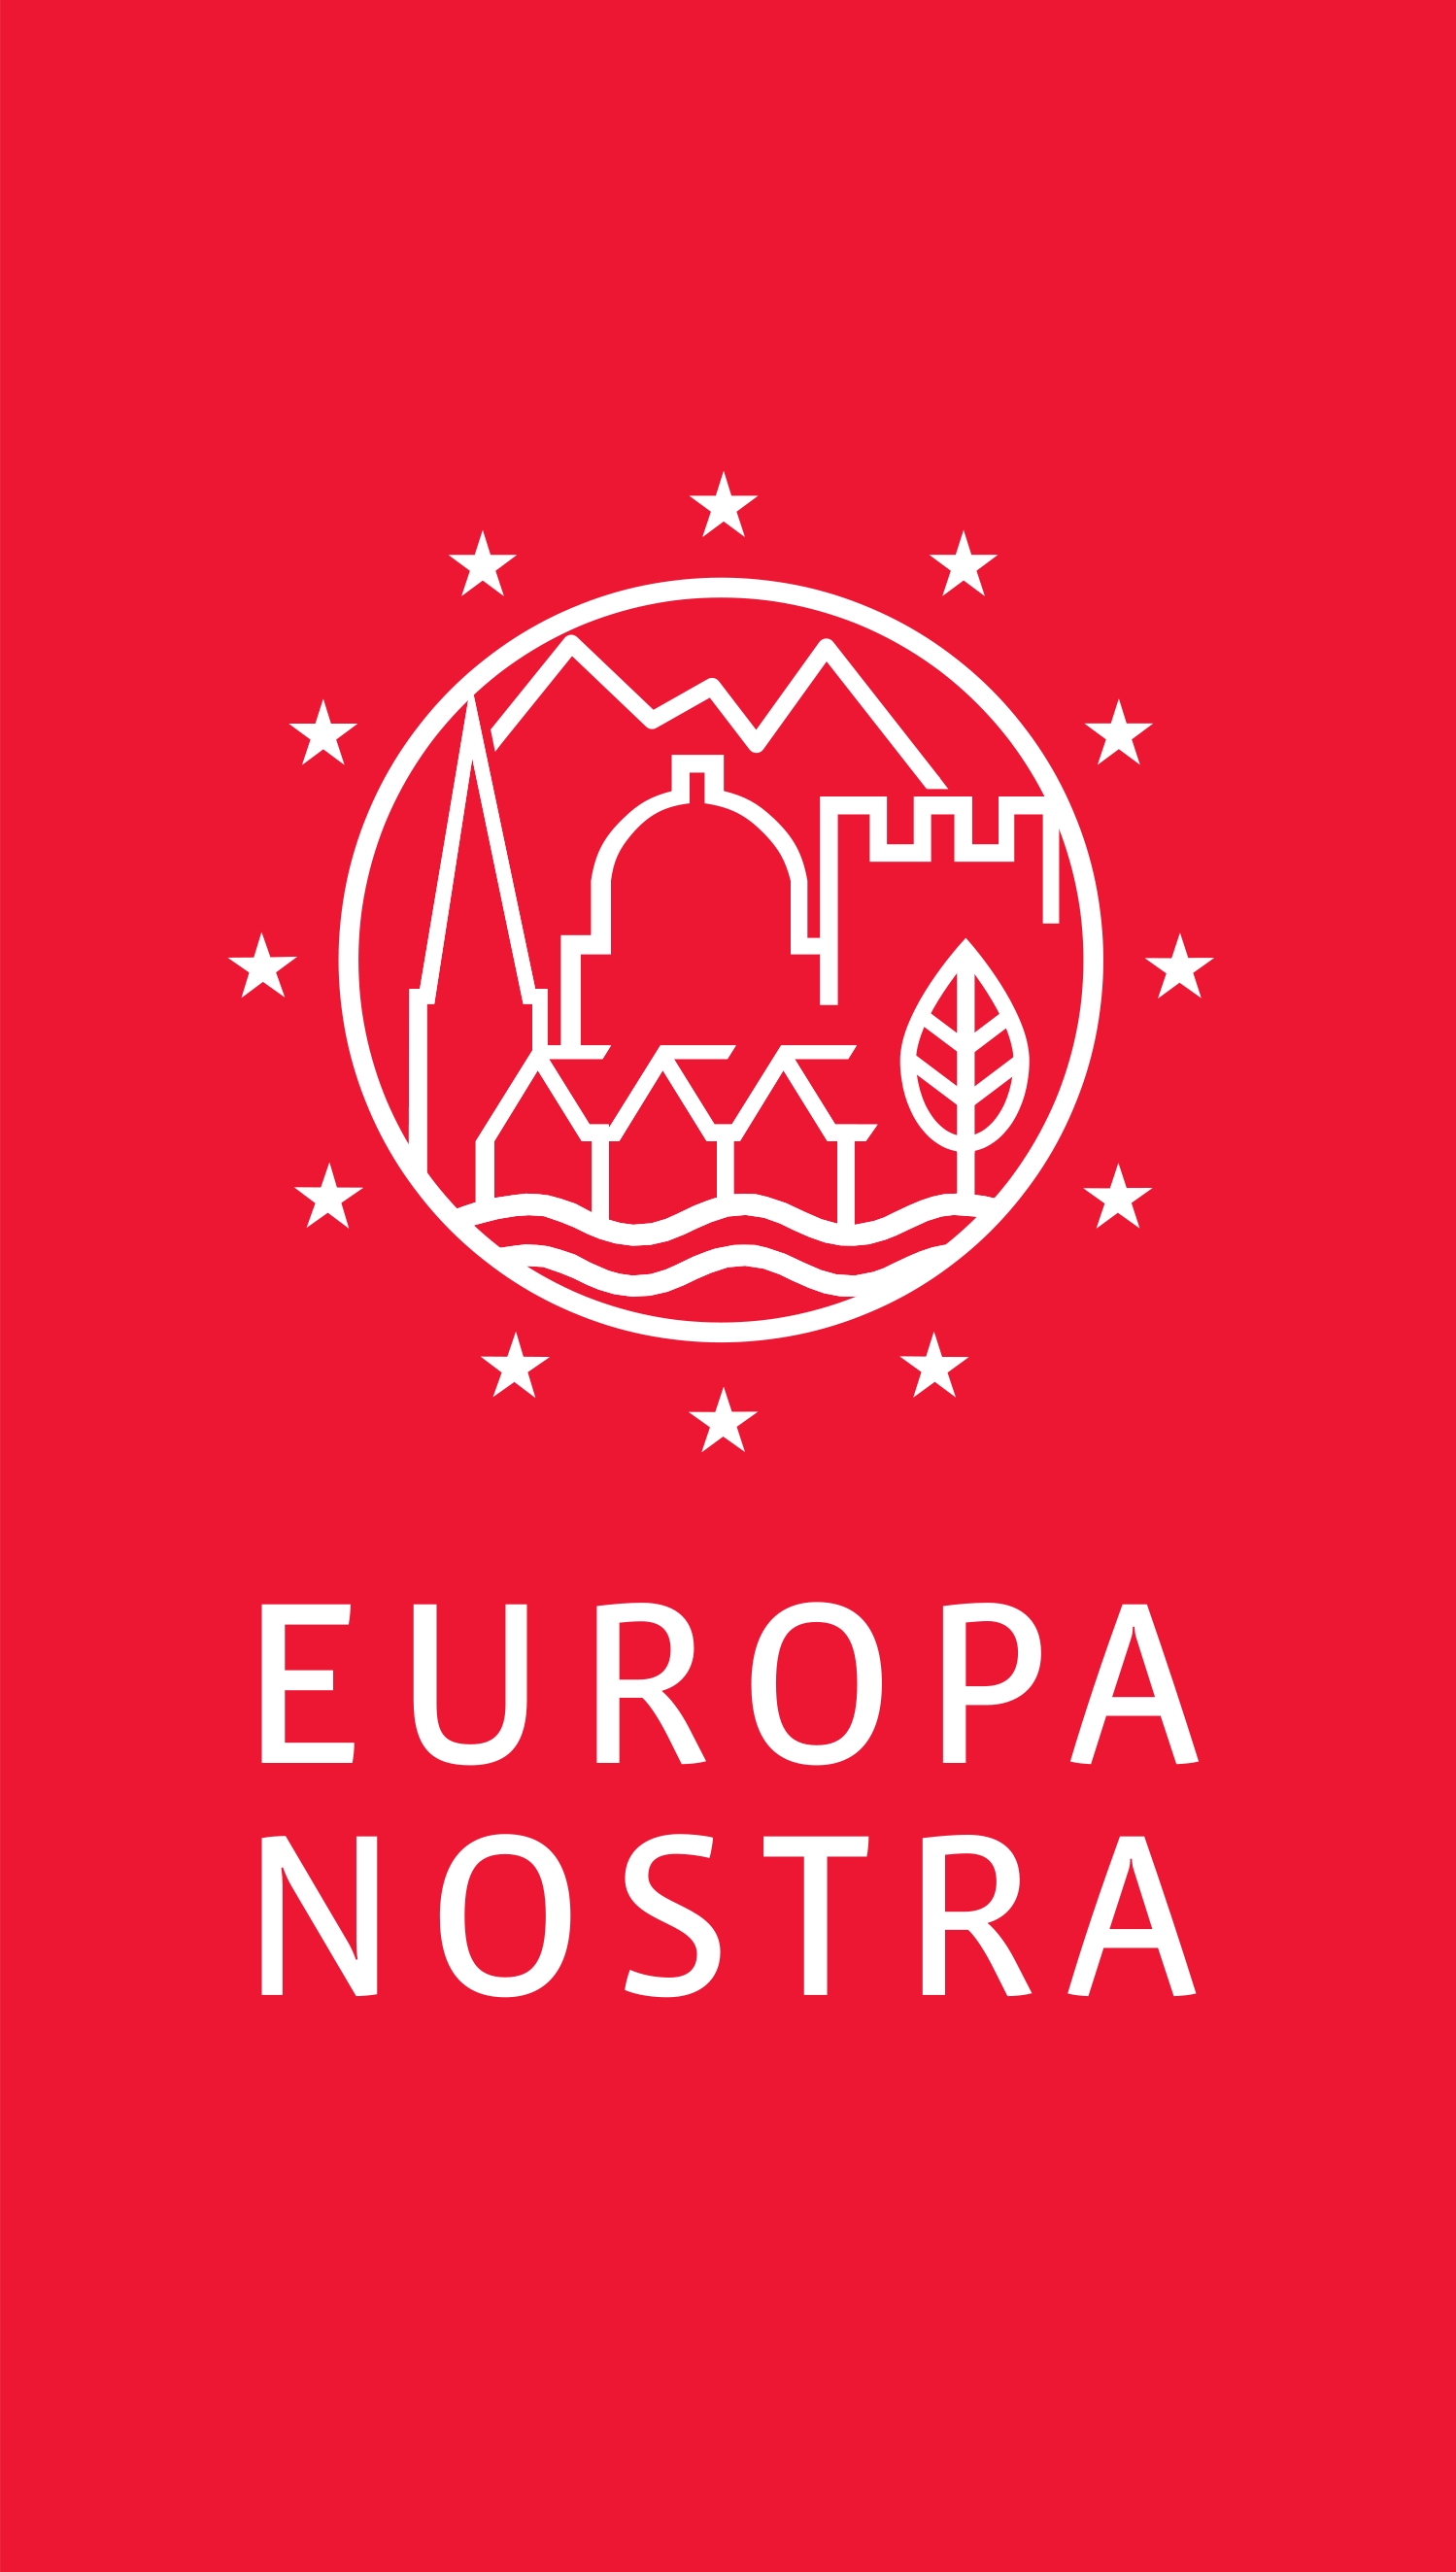 europa_nostra logo_red_high.jpg